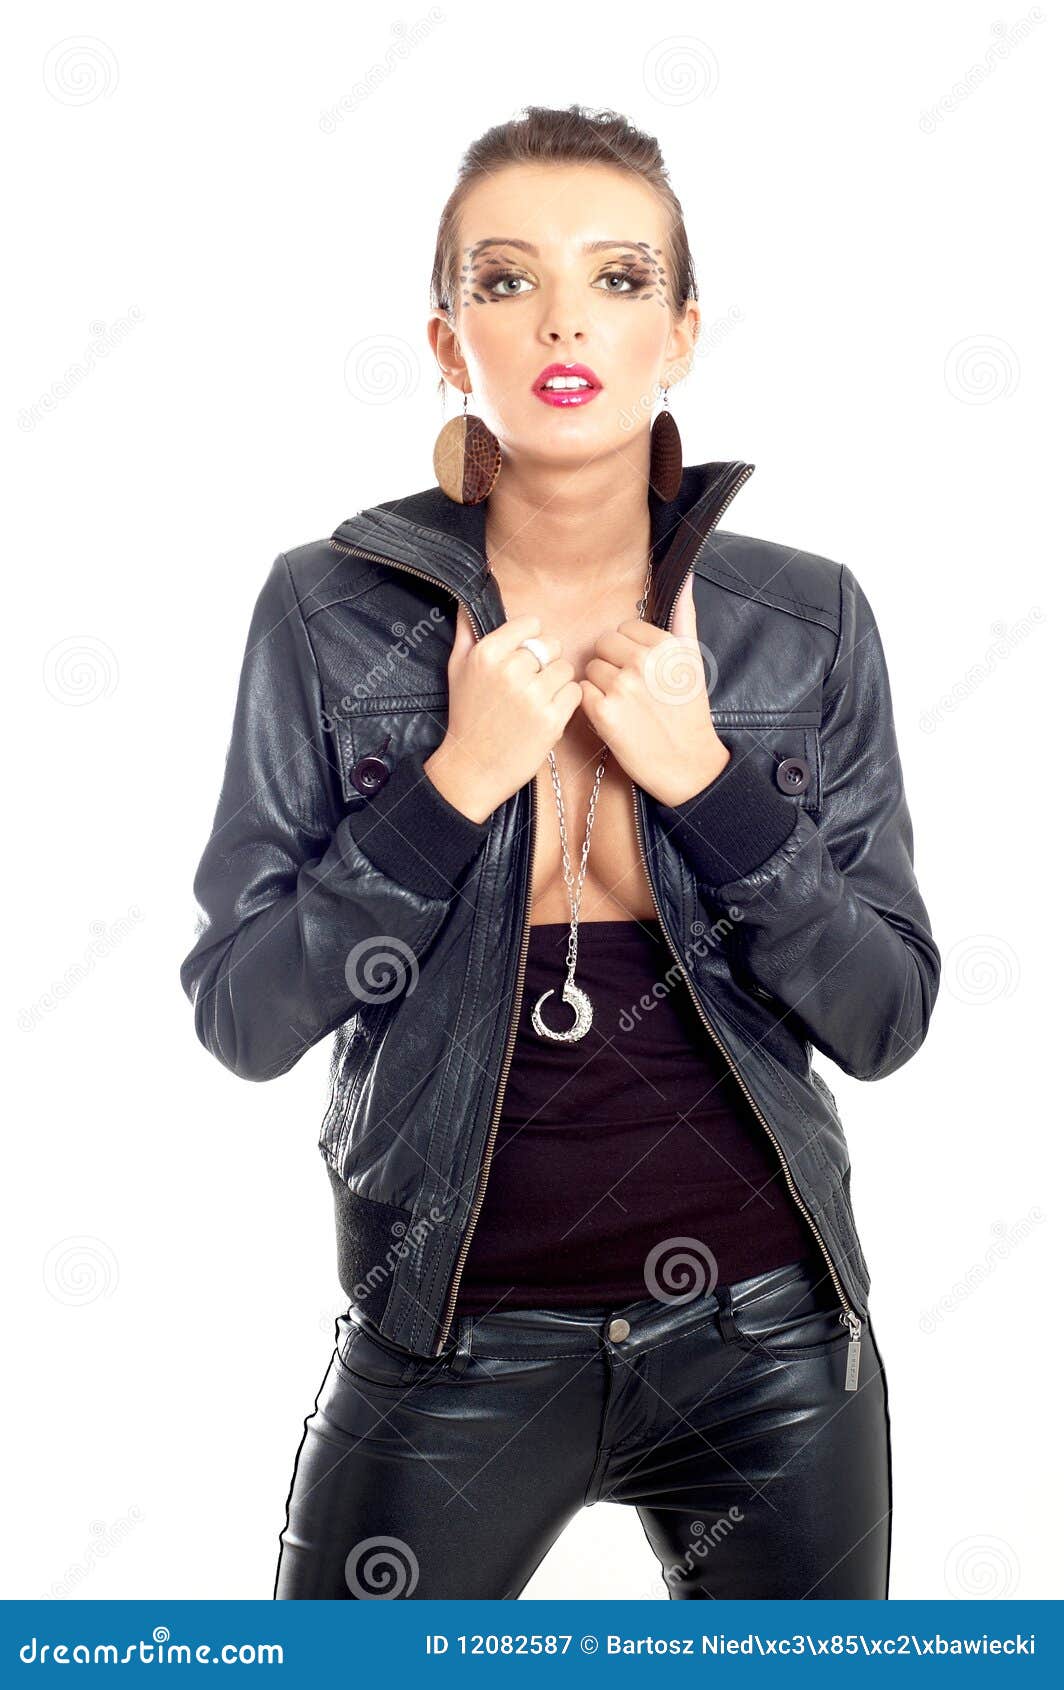 Punk rock  fashion girl stock image Image of adult lips 